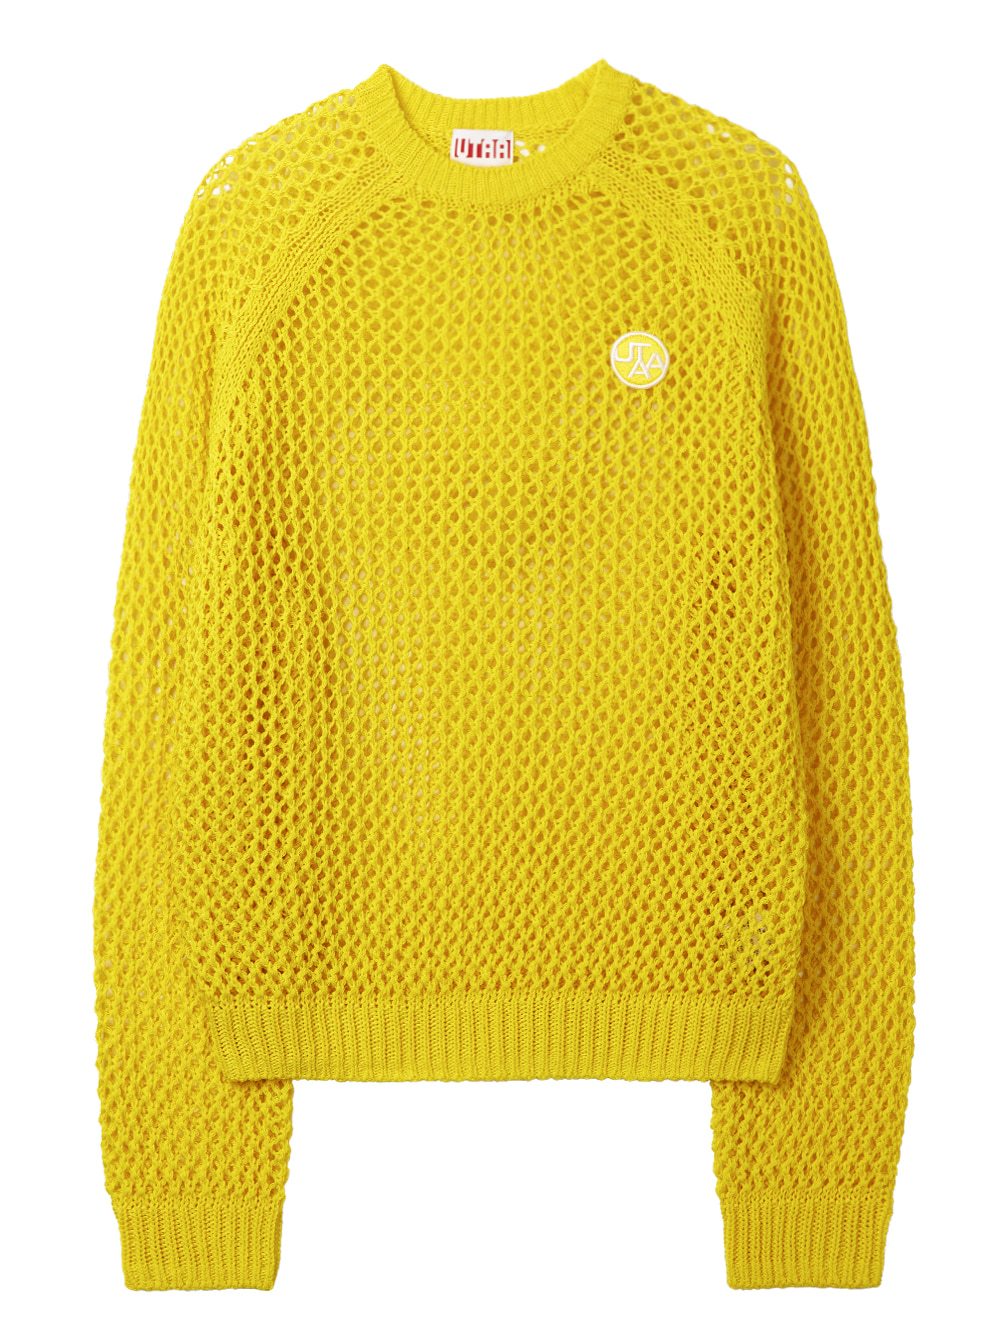 UTAA Crocher Scasi Raglan Knit : Yellow (UB2KTF254YE)